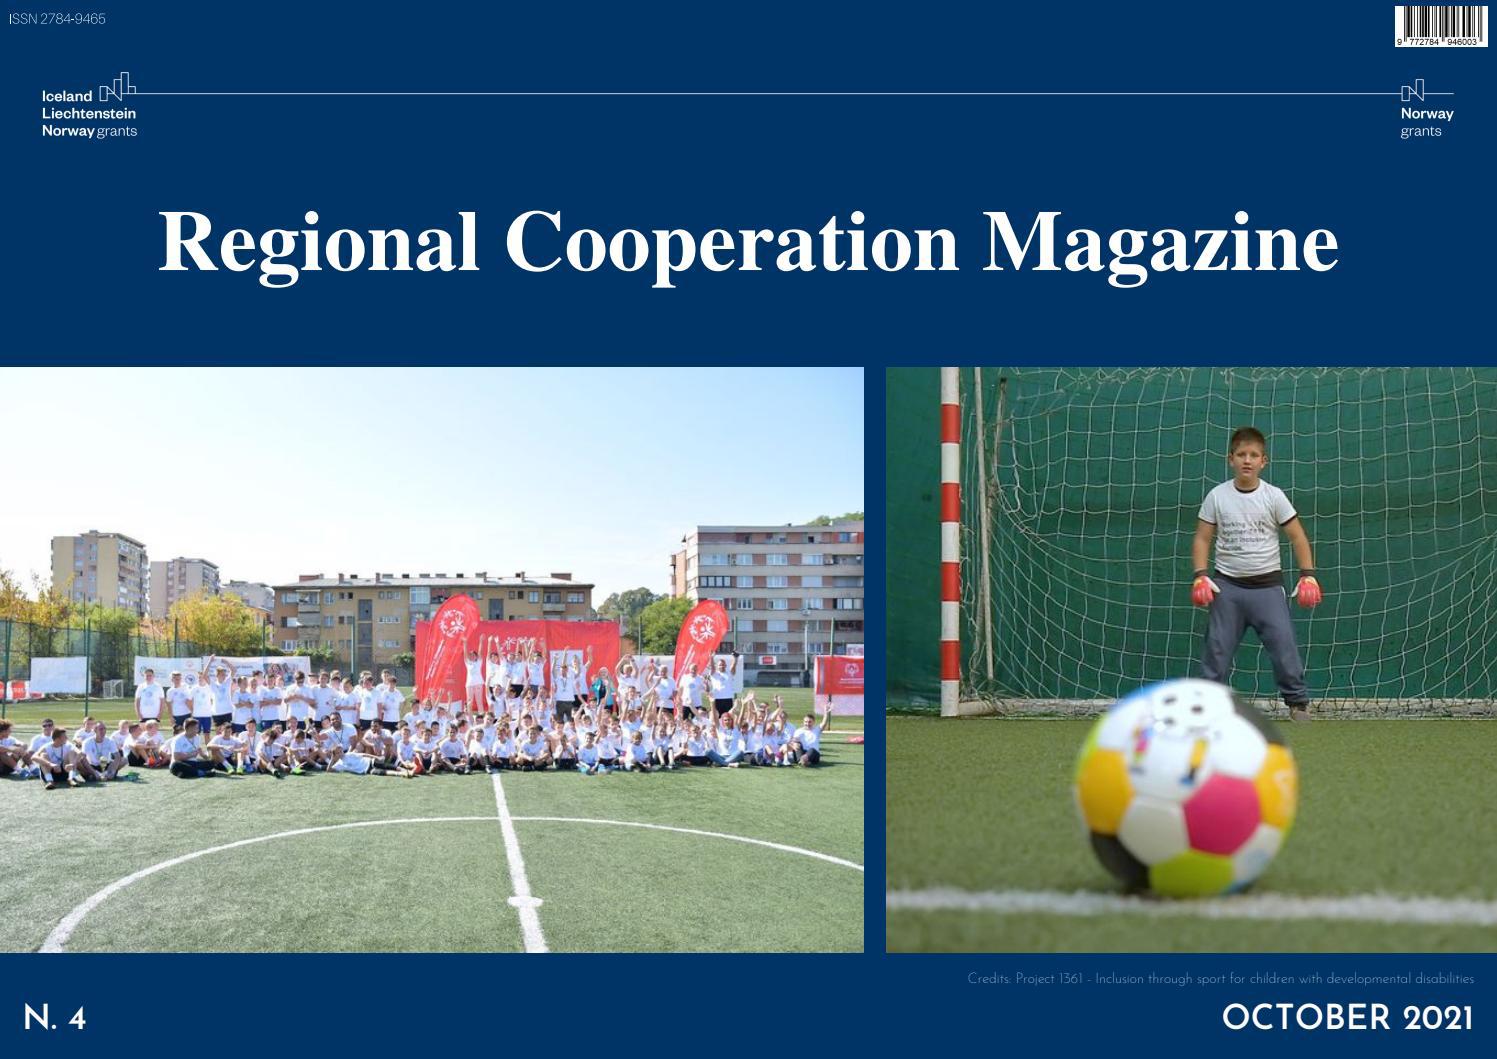 The Regional Cooperation Magazine №4, October 2021